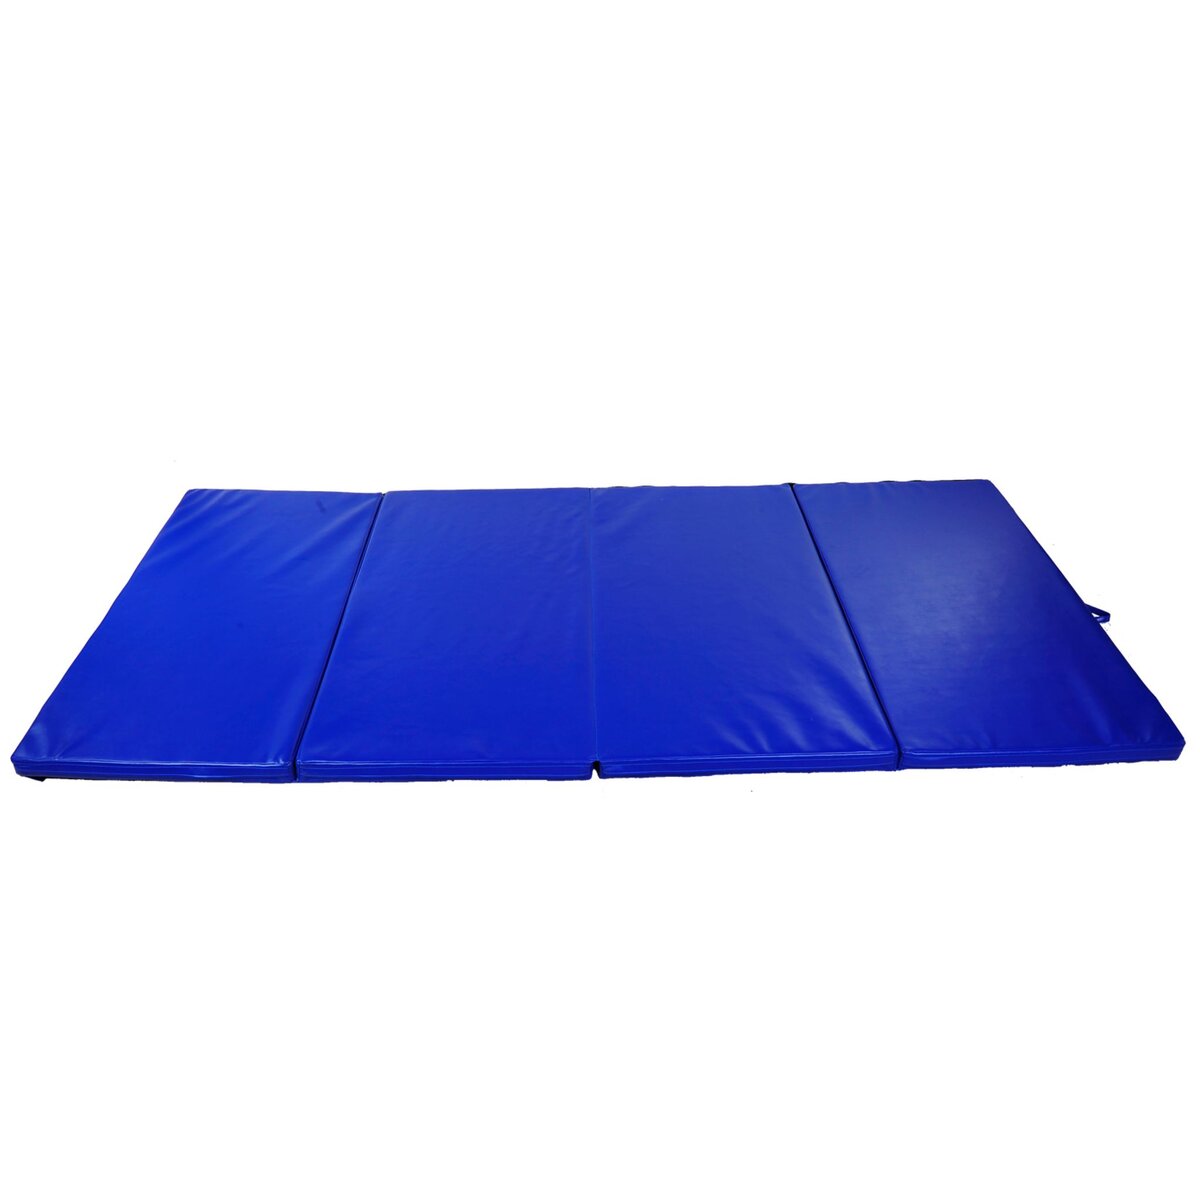 Homcom - Tapis de sol gymnastique Fitness pliable portable